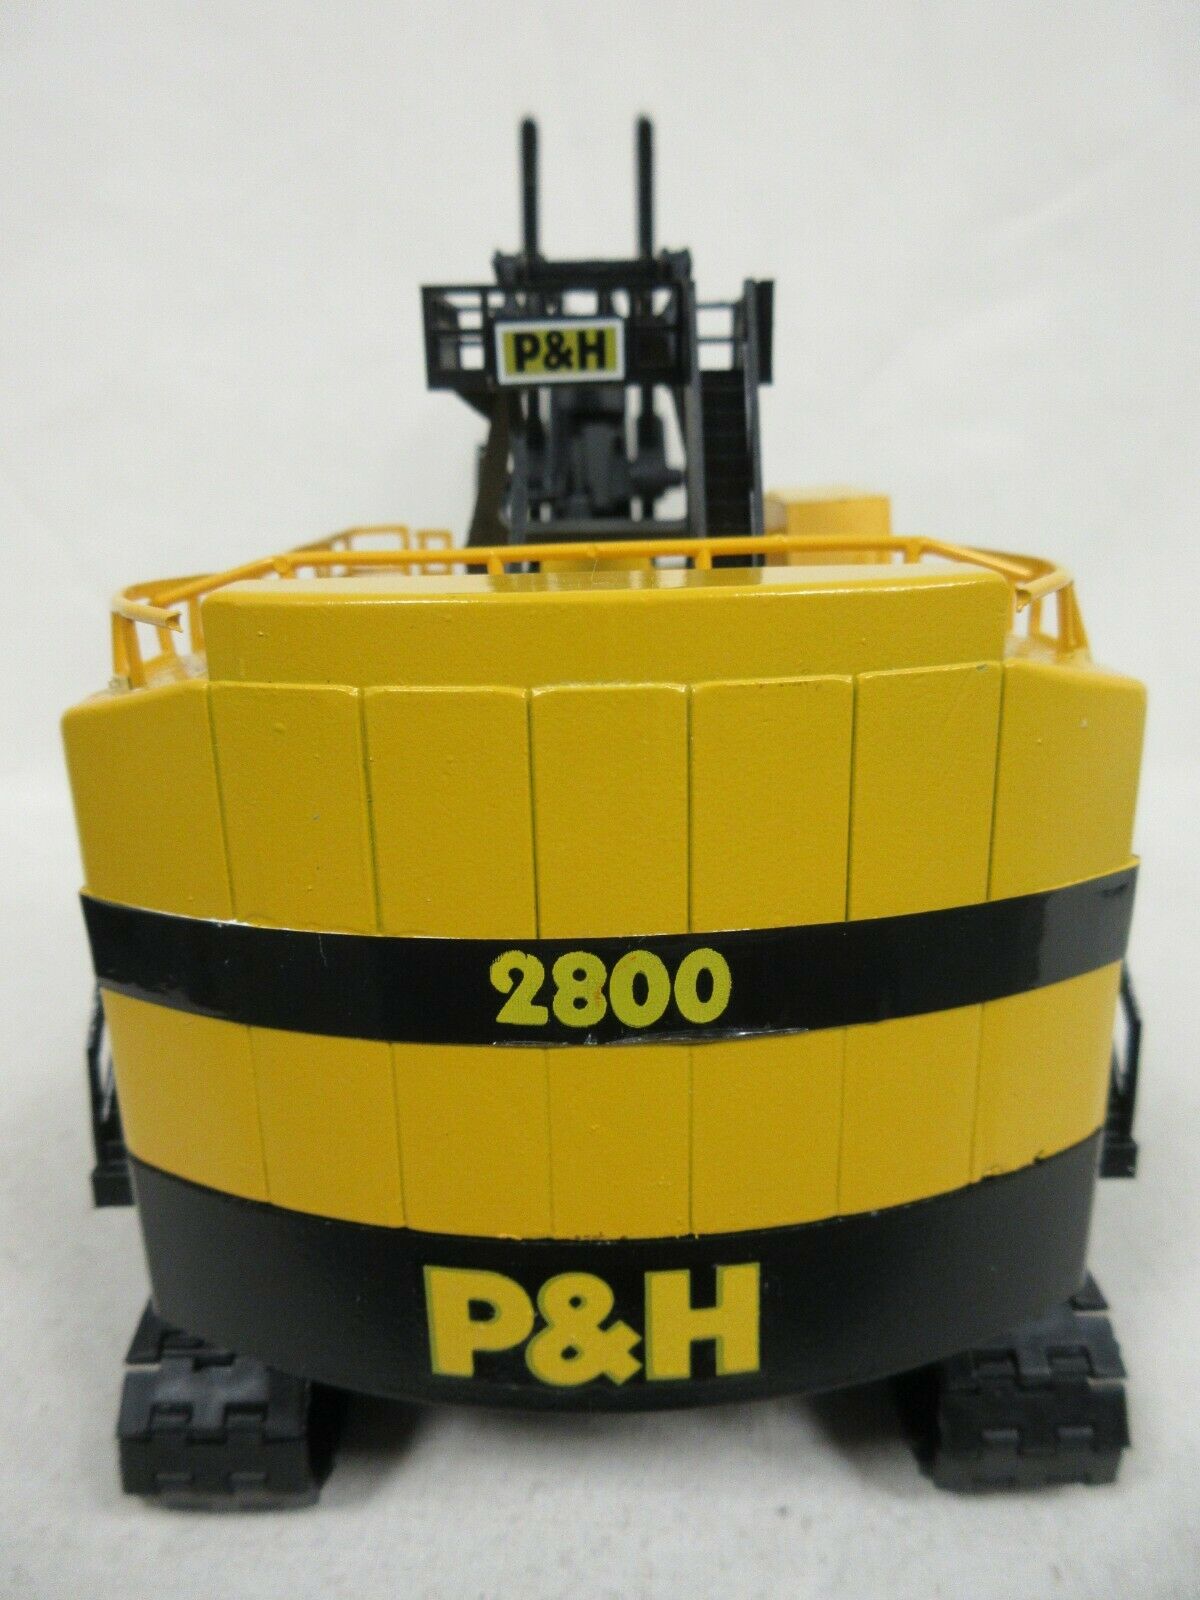 2940 Pala Minera P&H 2800 Escala 1:87 (Modelo Descontinuado) - CAT SERVICE PERU S.A.C.